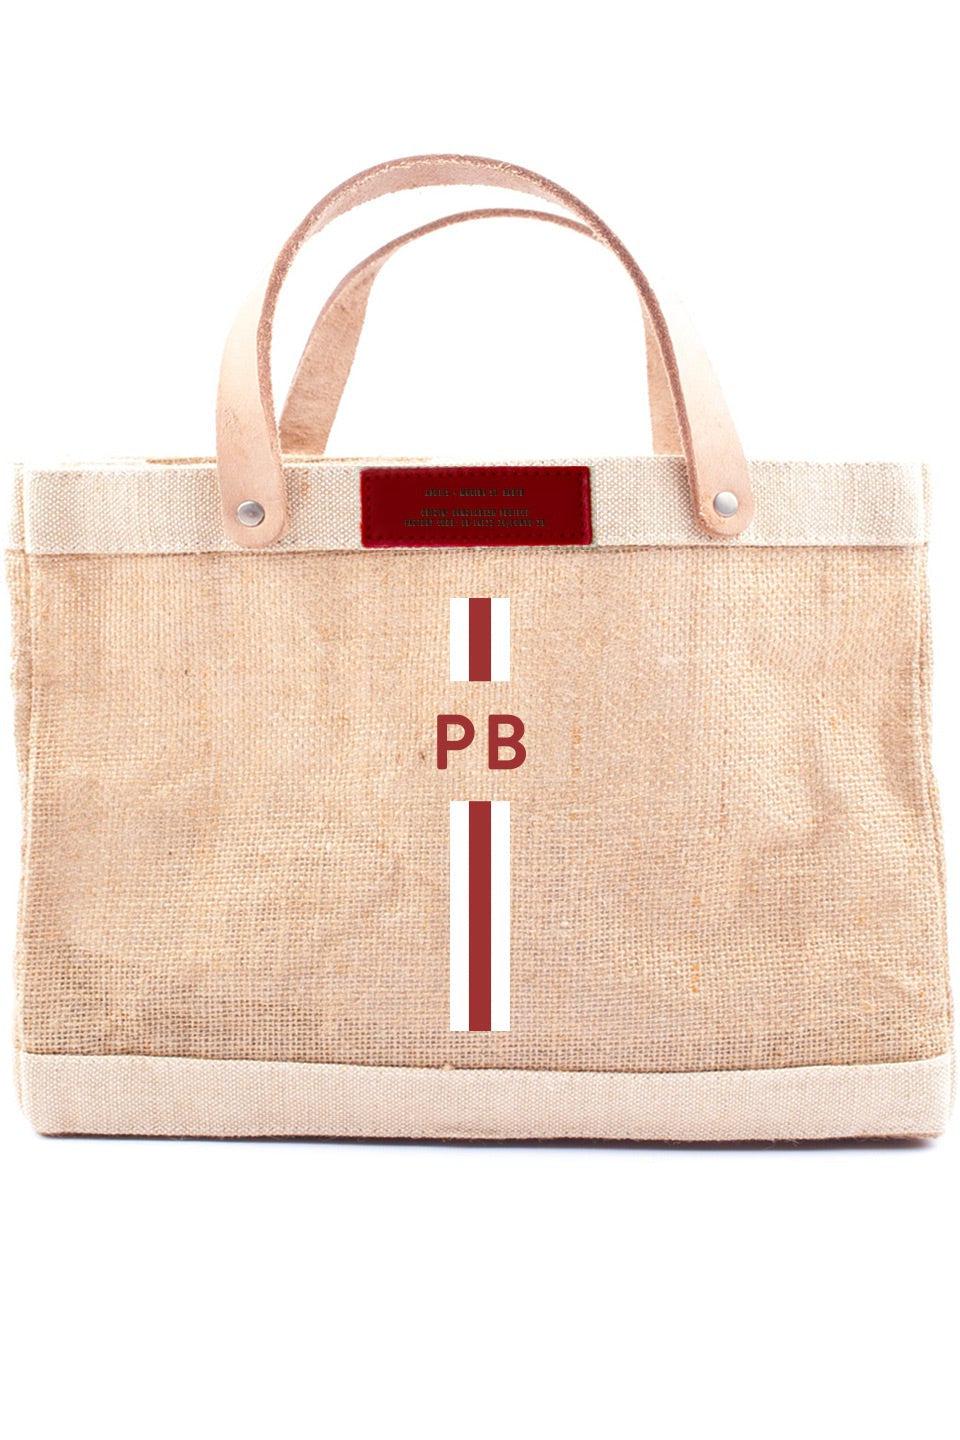 PB Bag red stripe - Premium Bag from Marina St. Barth - Just $129.00! Shop now at Marina St Barth